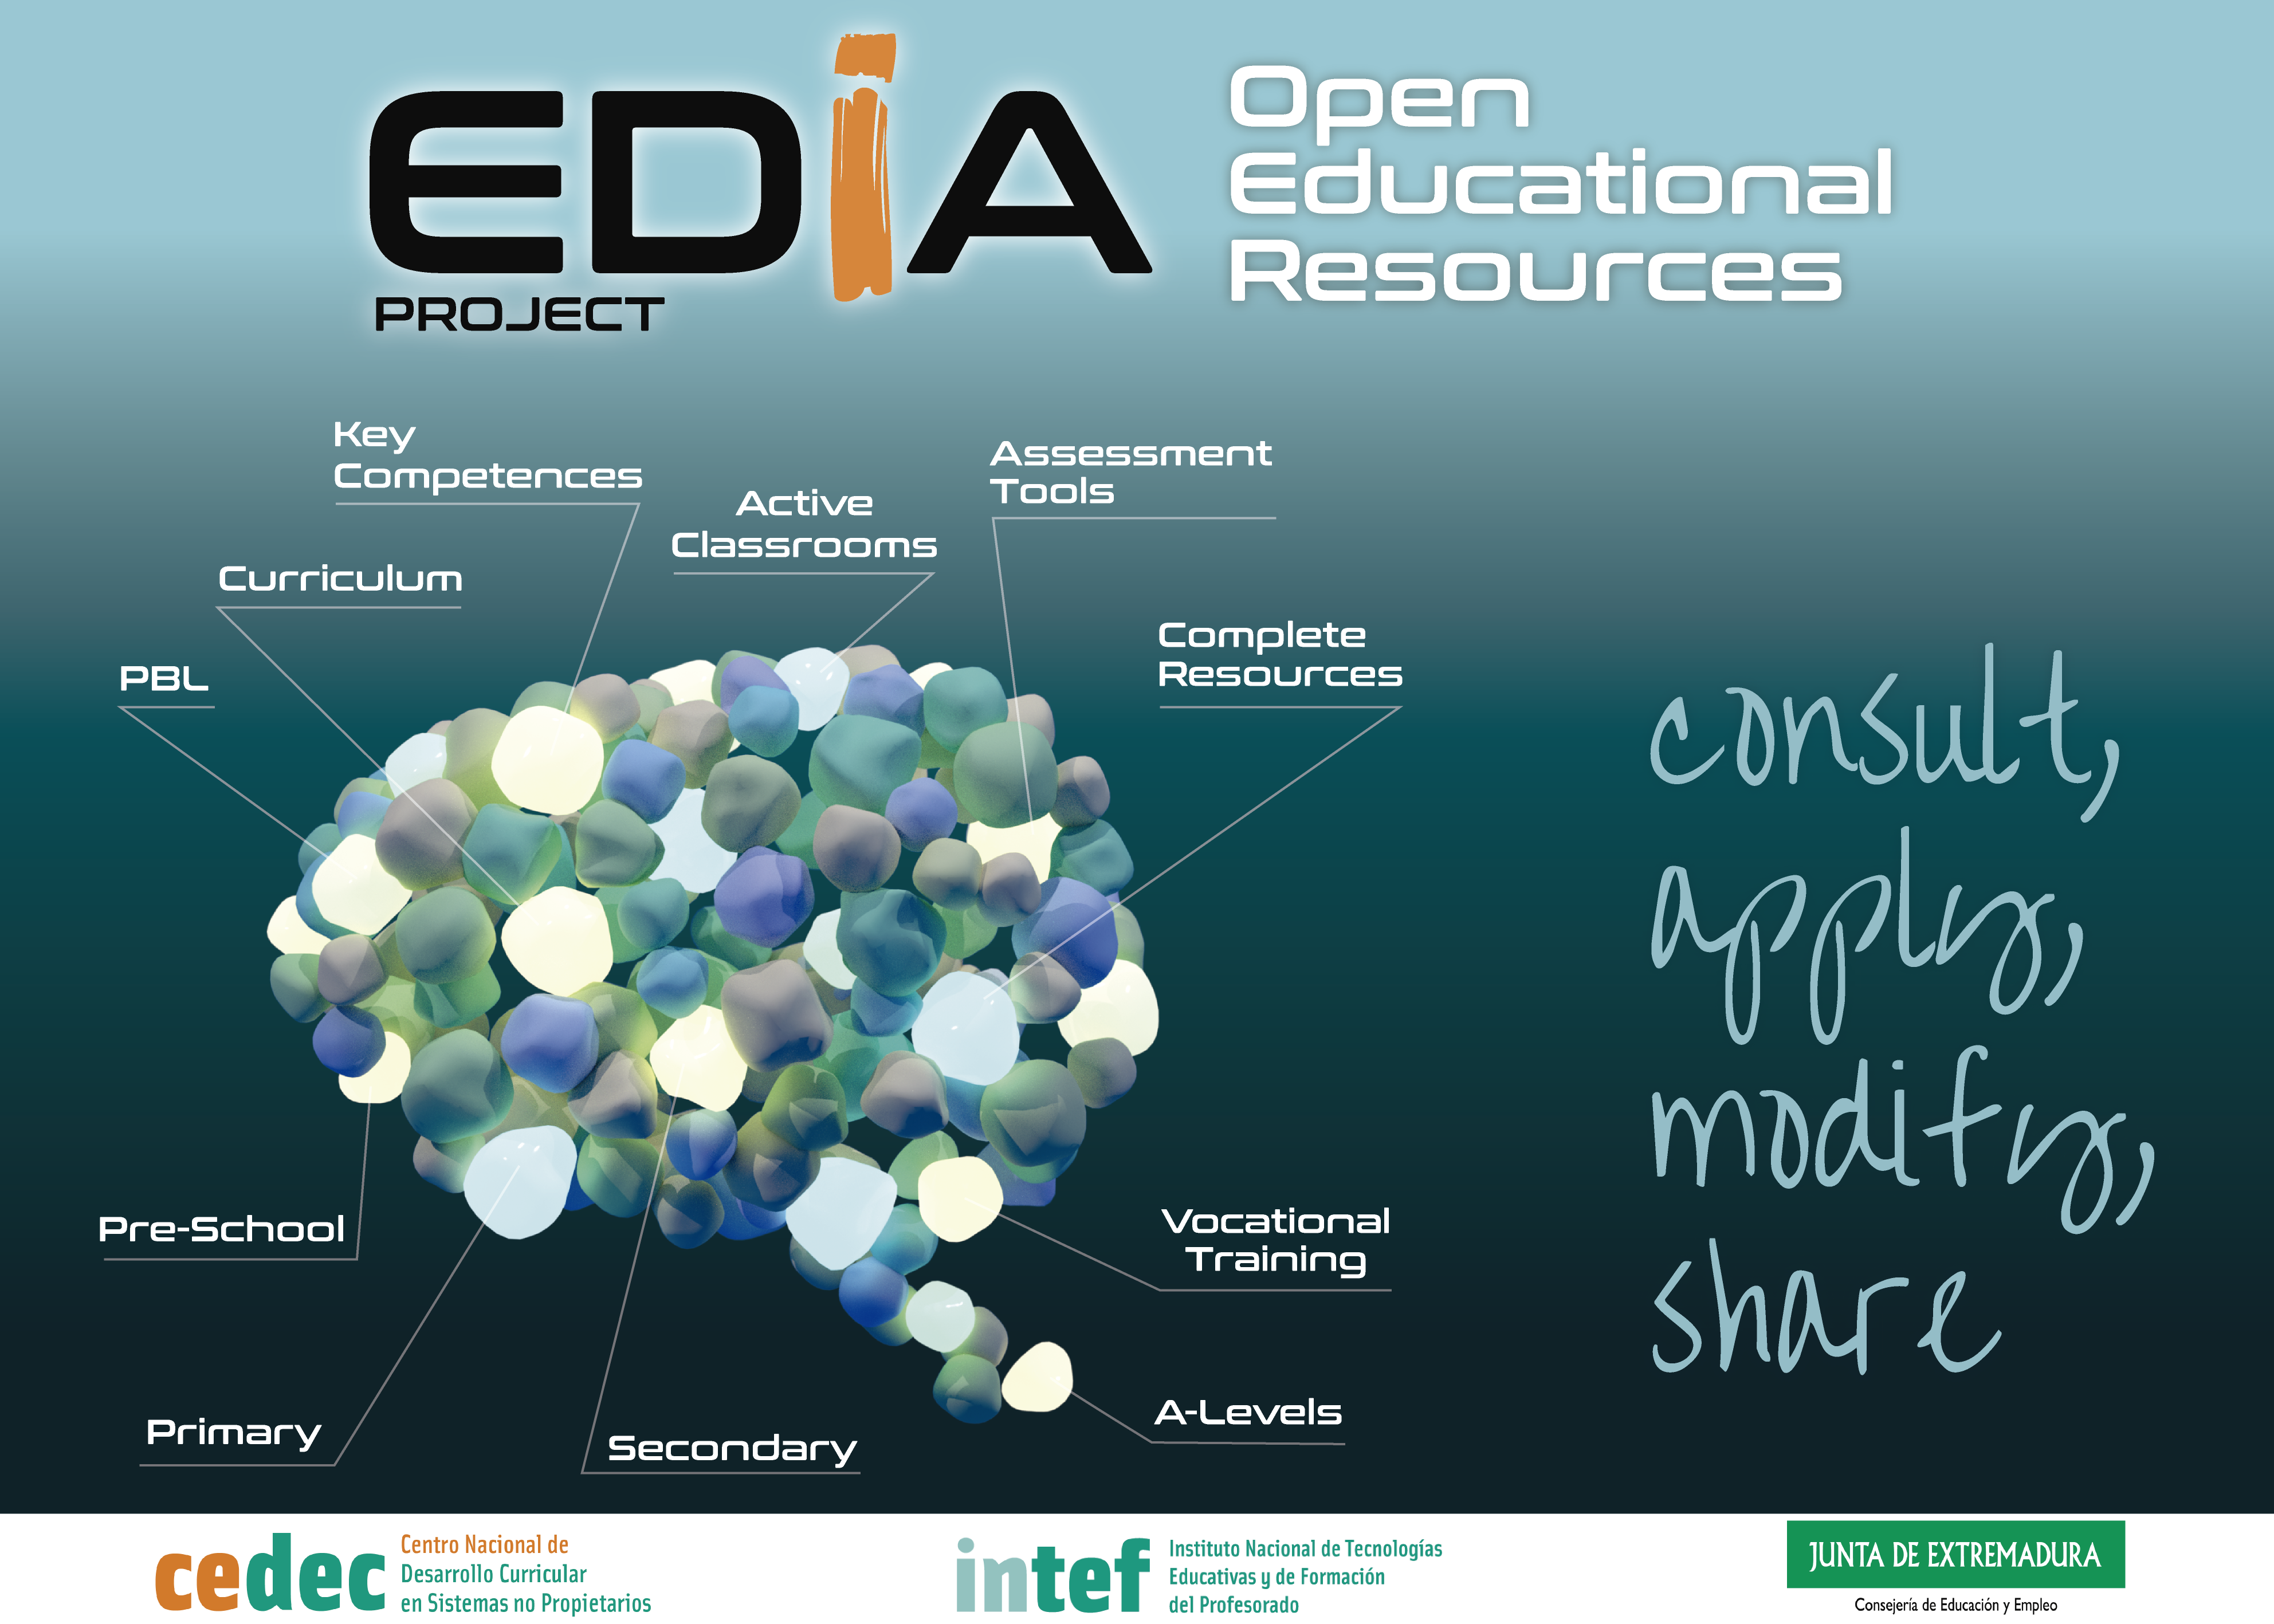 EDIA project